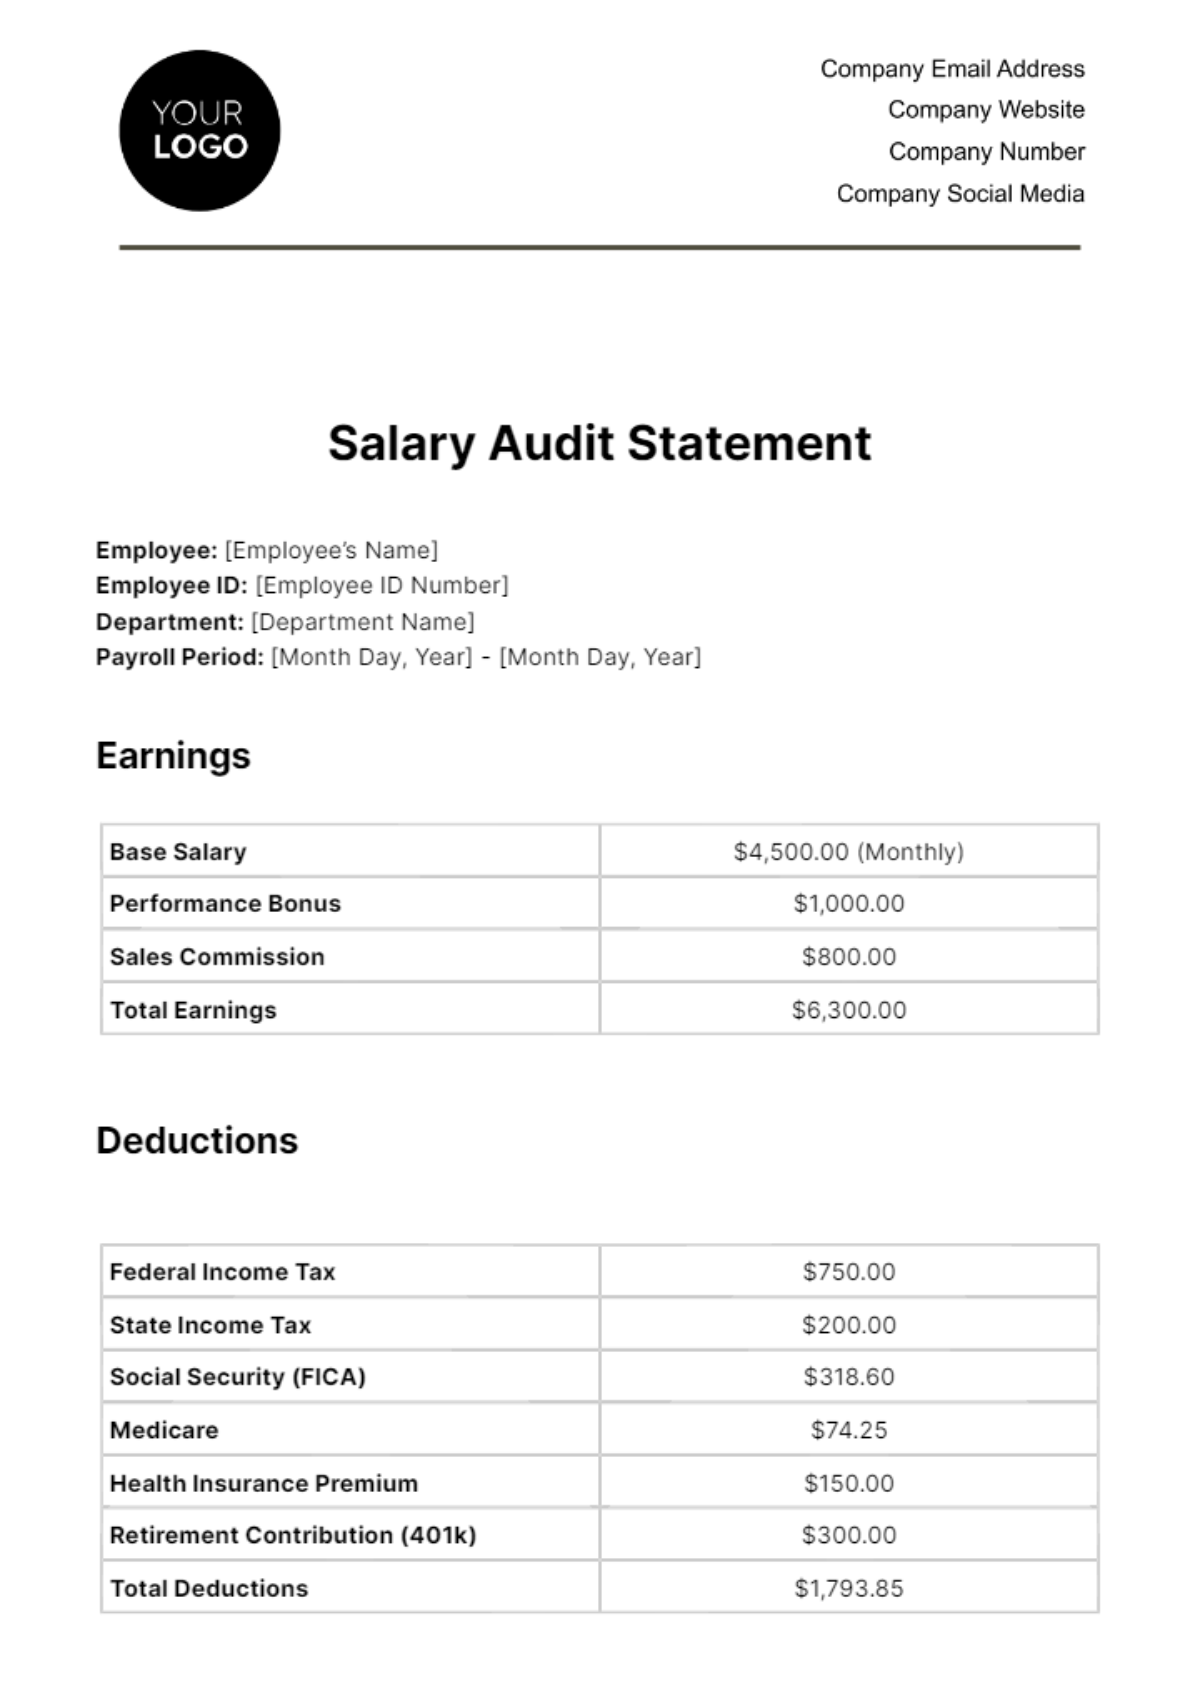 Salary Audit Statement HR Template